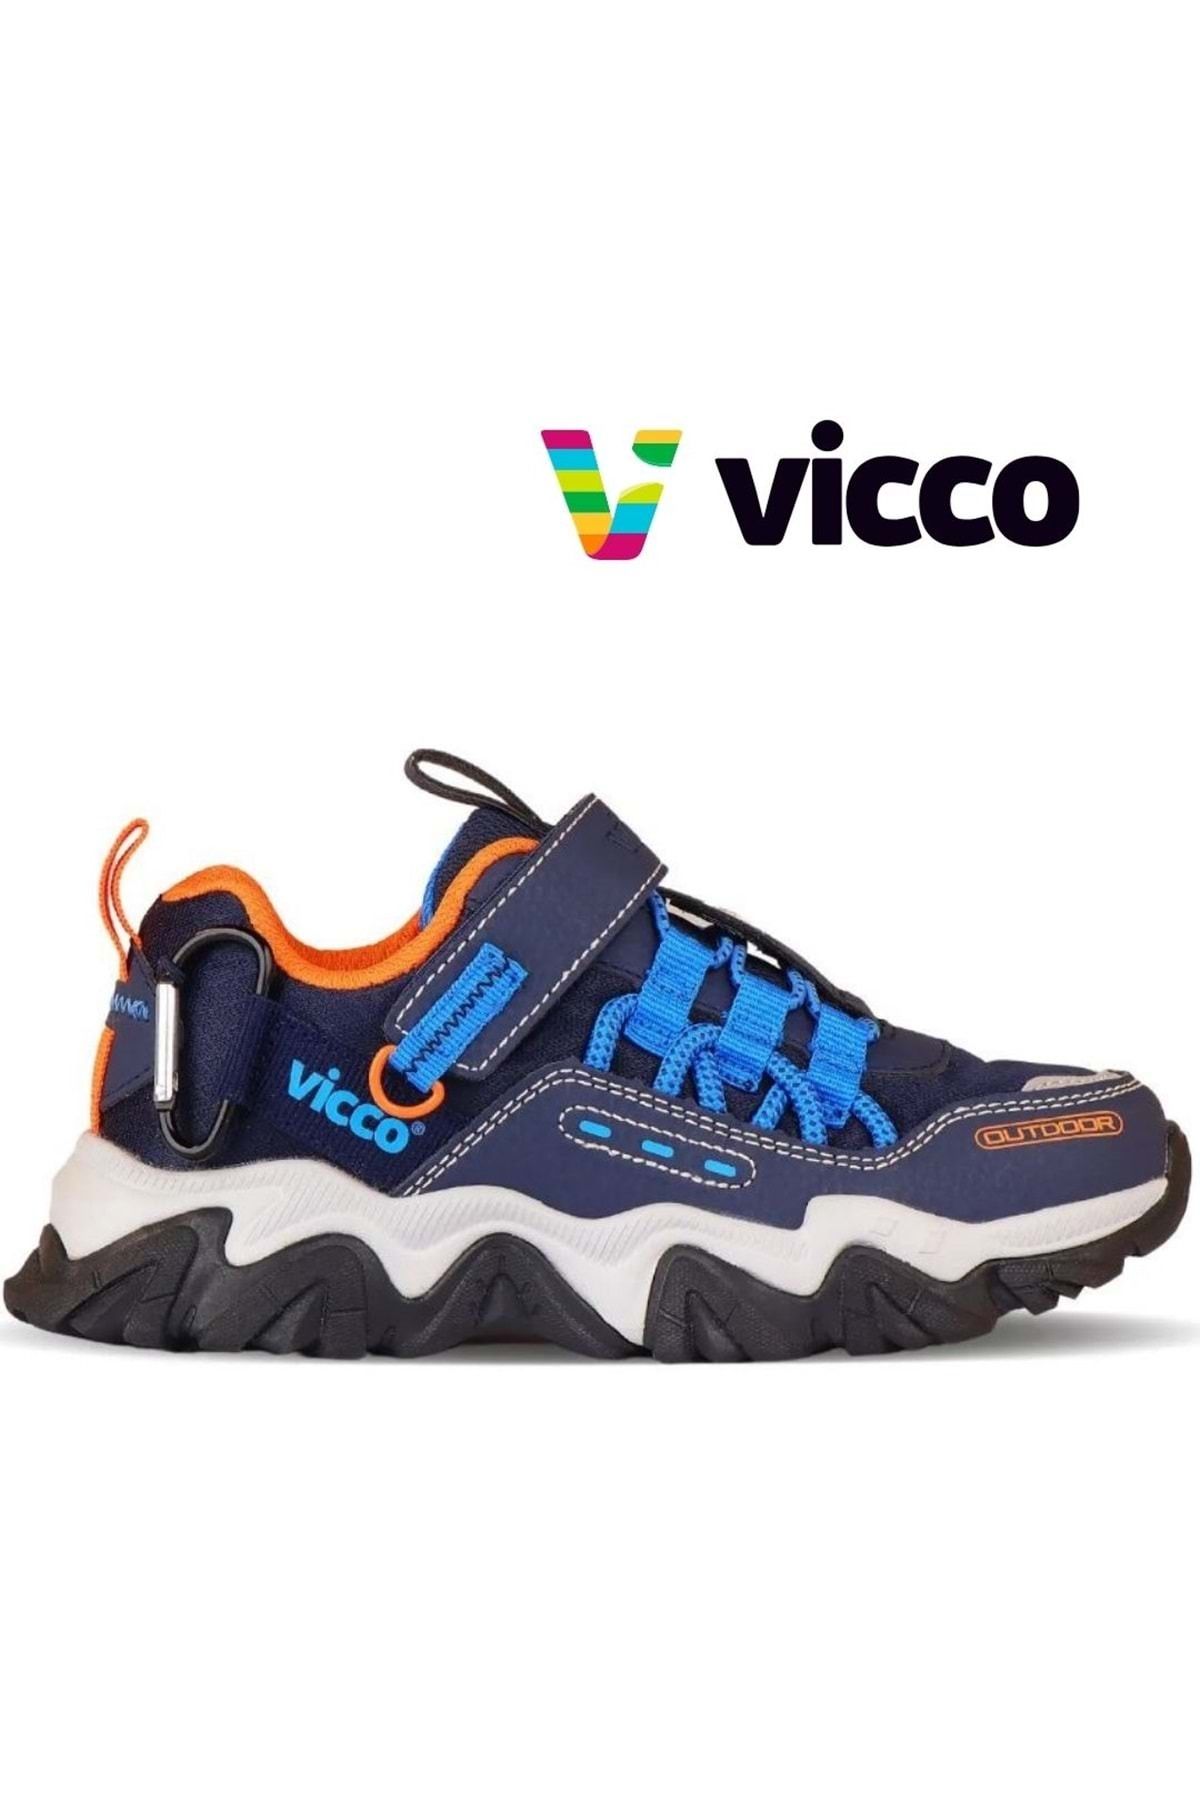 Kids Club Shoes Vicco Toro Trekking Outdoor Ortopedik Çocuk Spor Ayakkabı Lacivert